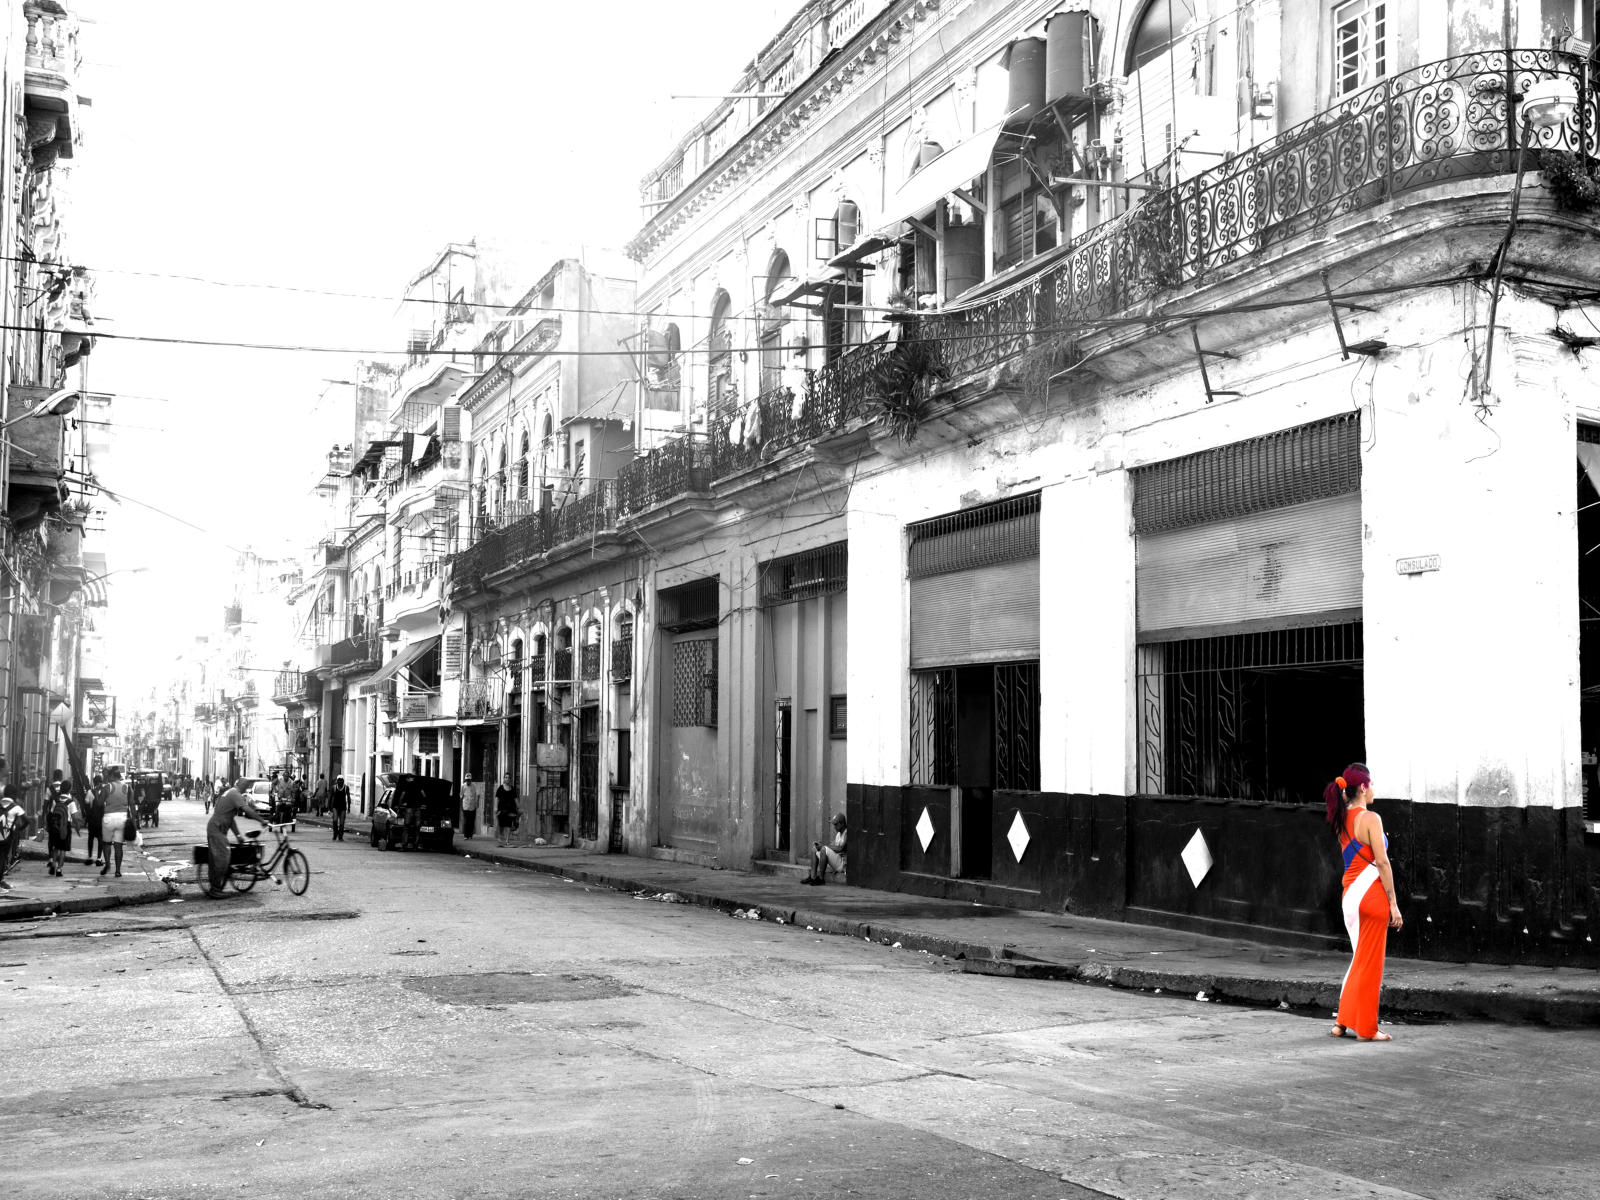 52989 architecture, woman in red, street scene.jpg